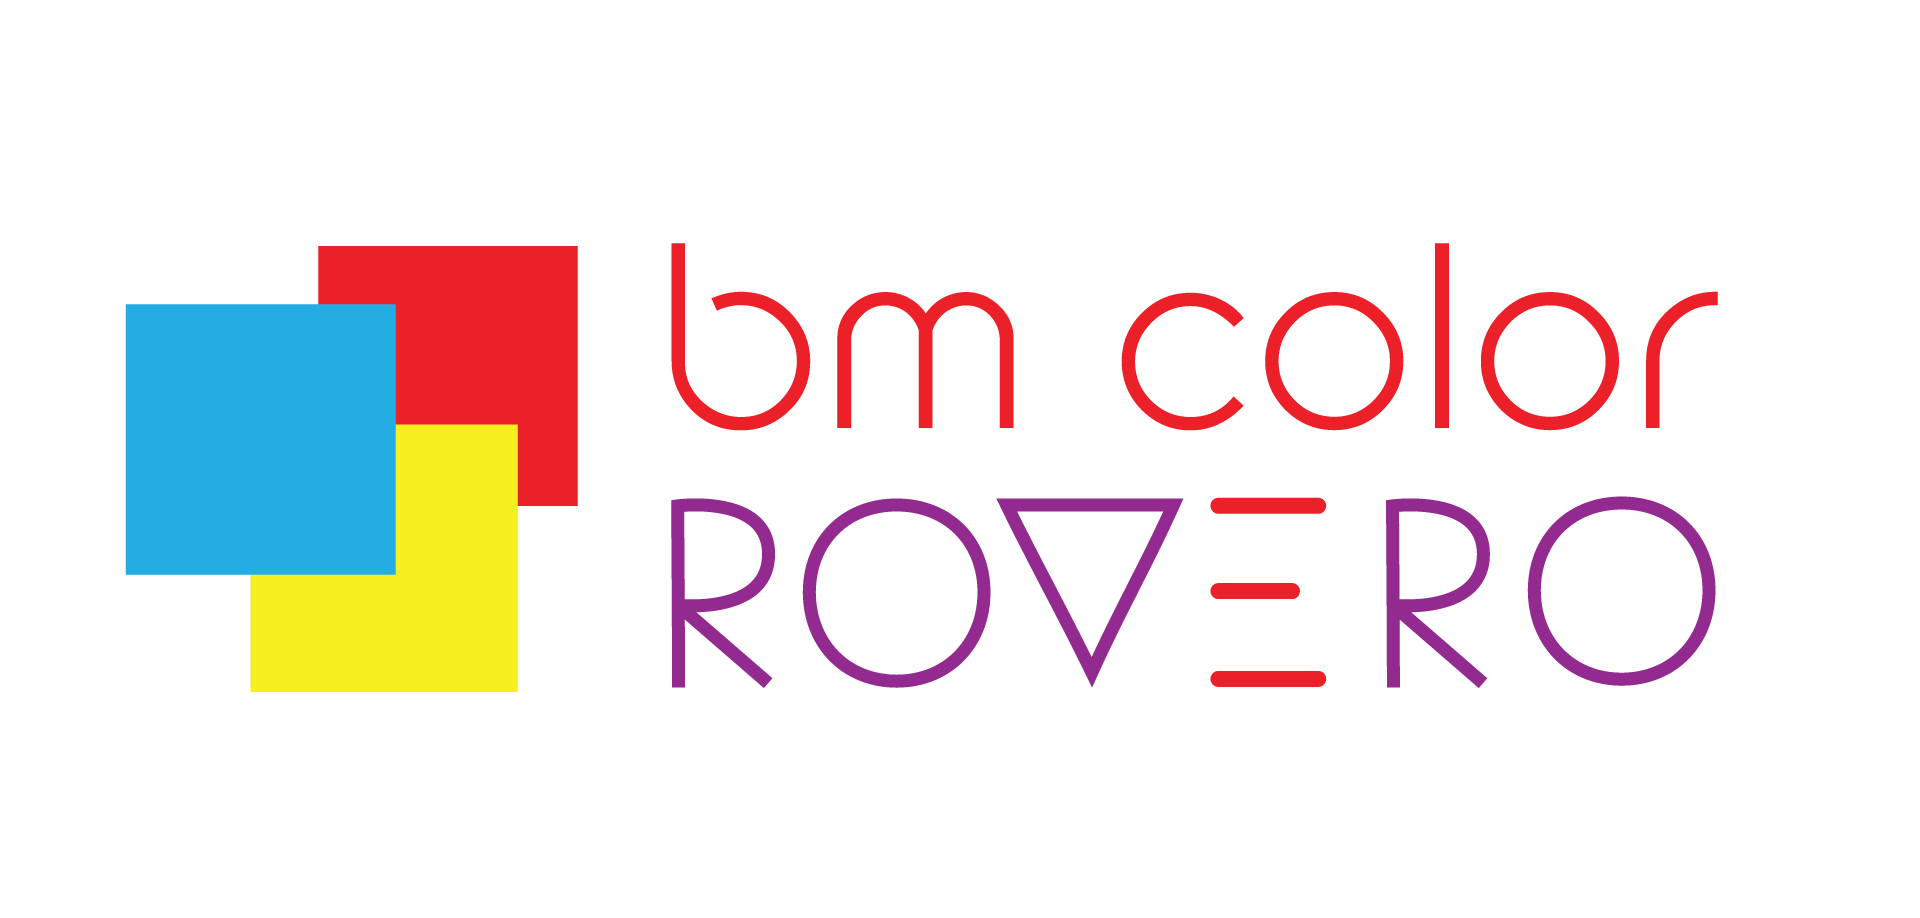 Bm-color-ROVERO-LOGO-RED